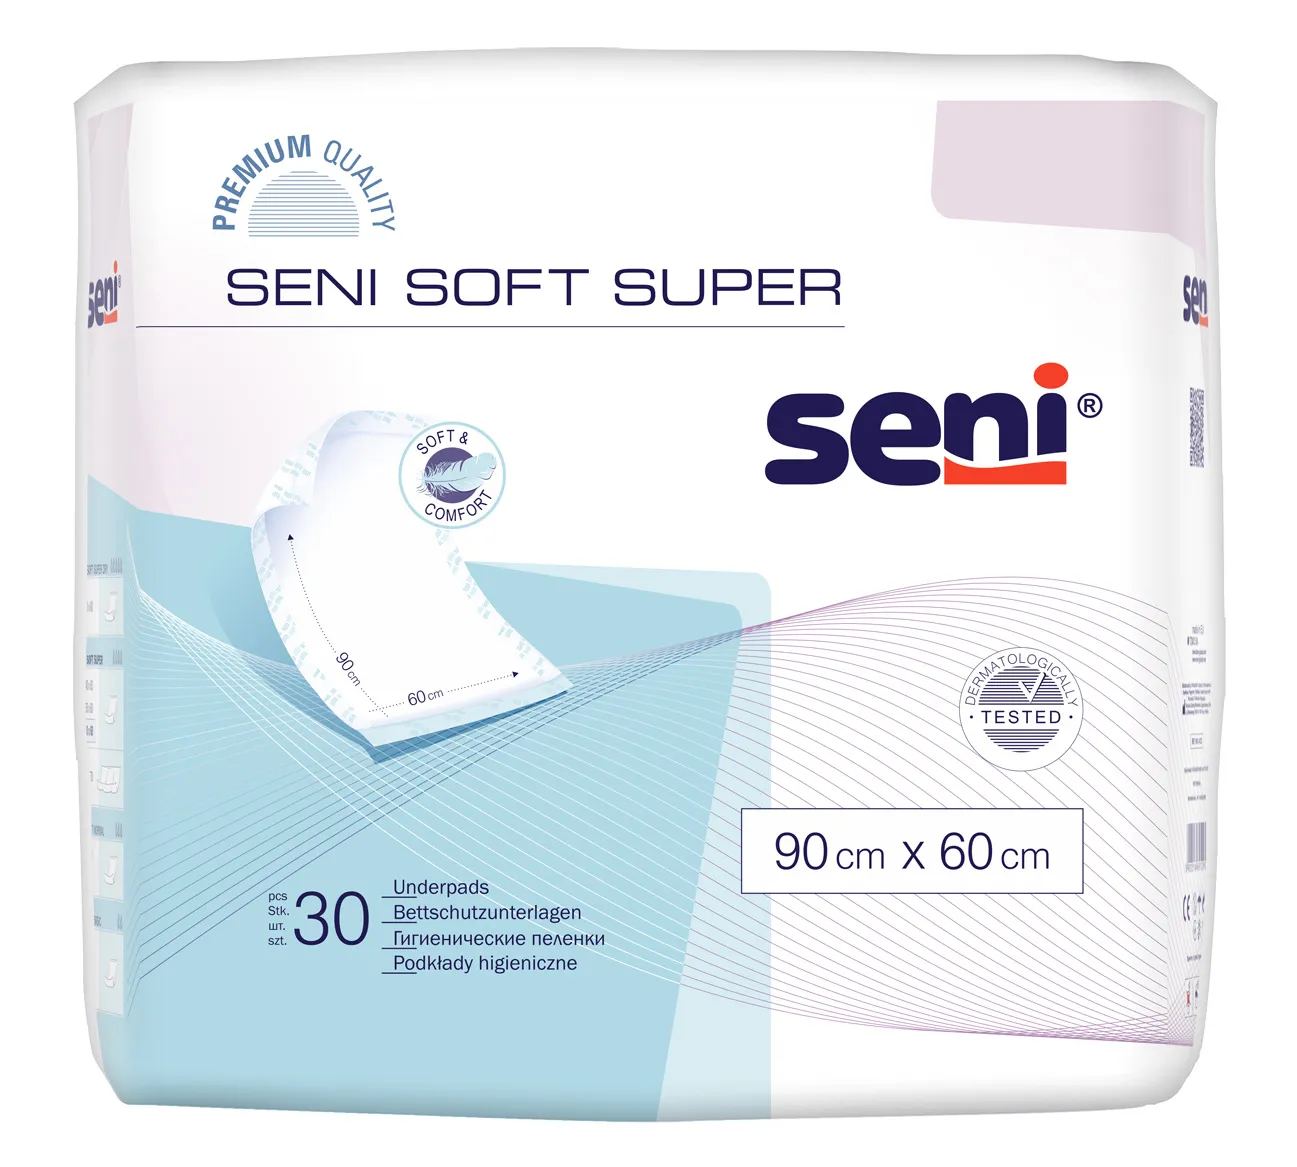 Seni Soft Super, 90x60 cm, podkłady higieniczne, 30 sztuk